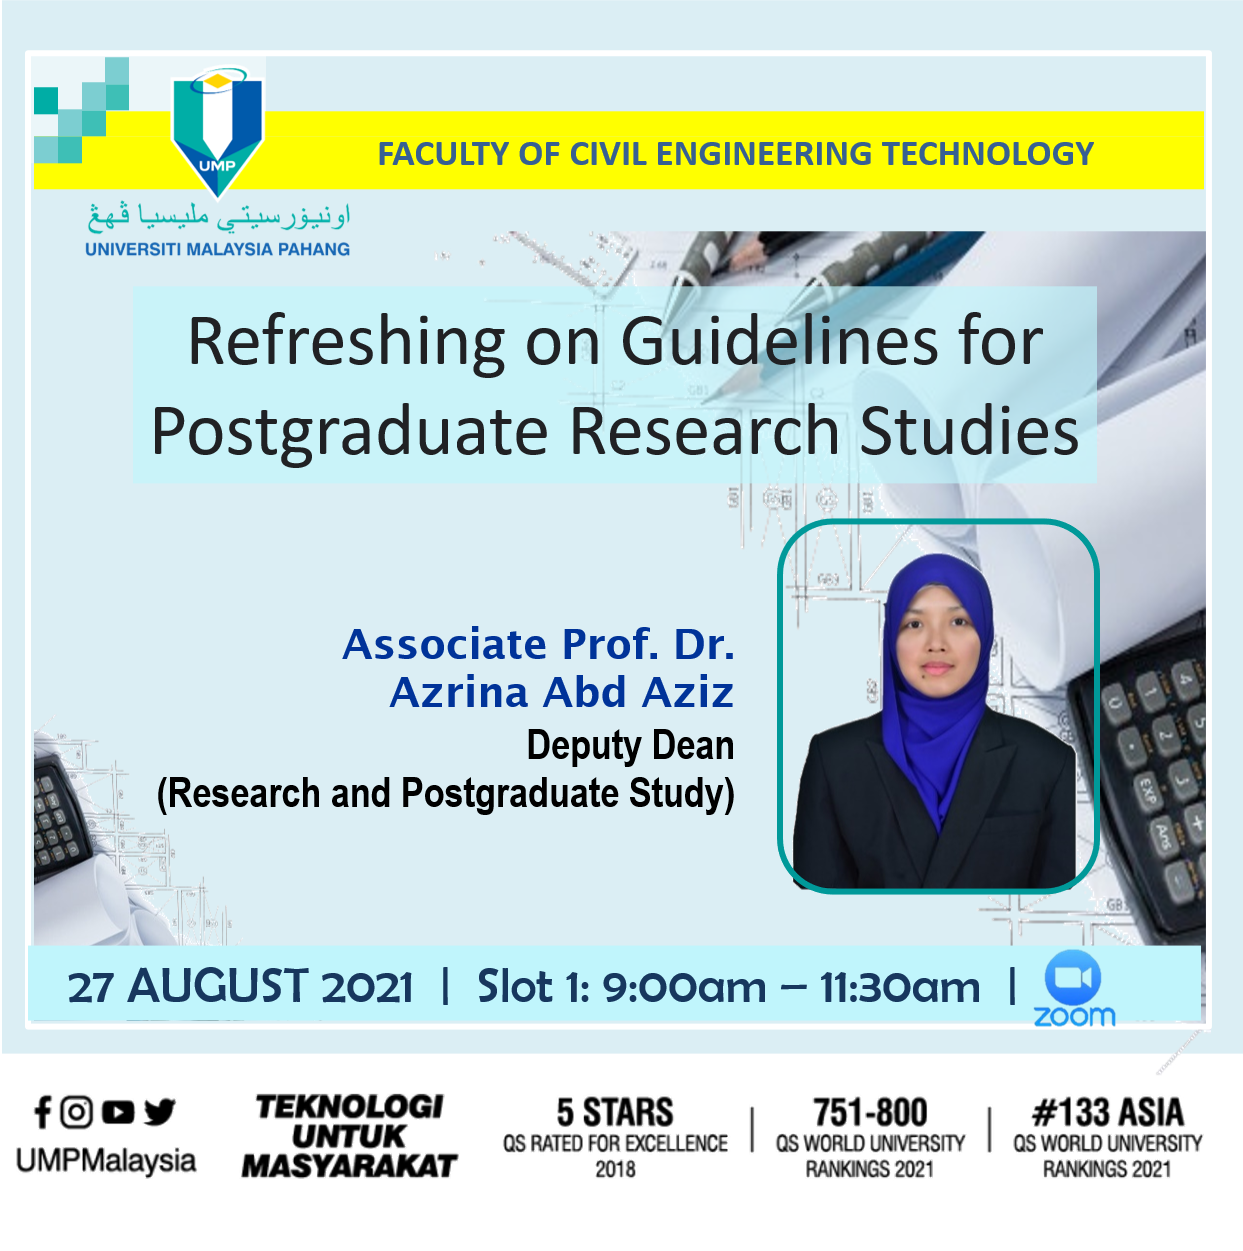 Guidelines for Postgraduate Research Studies Workshop - 27 August 2021